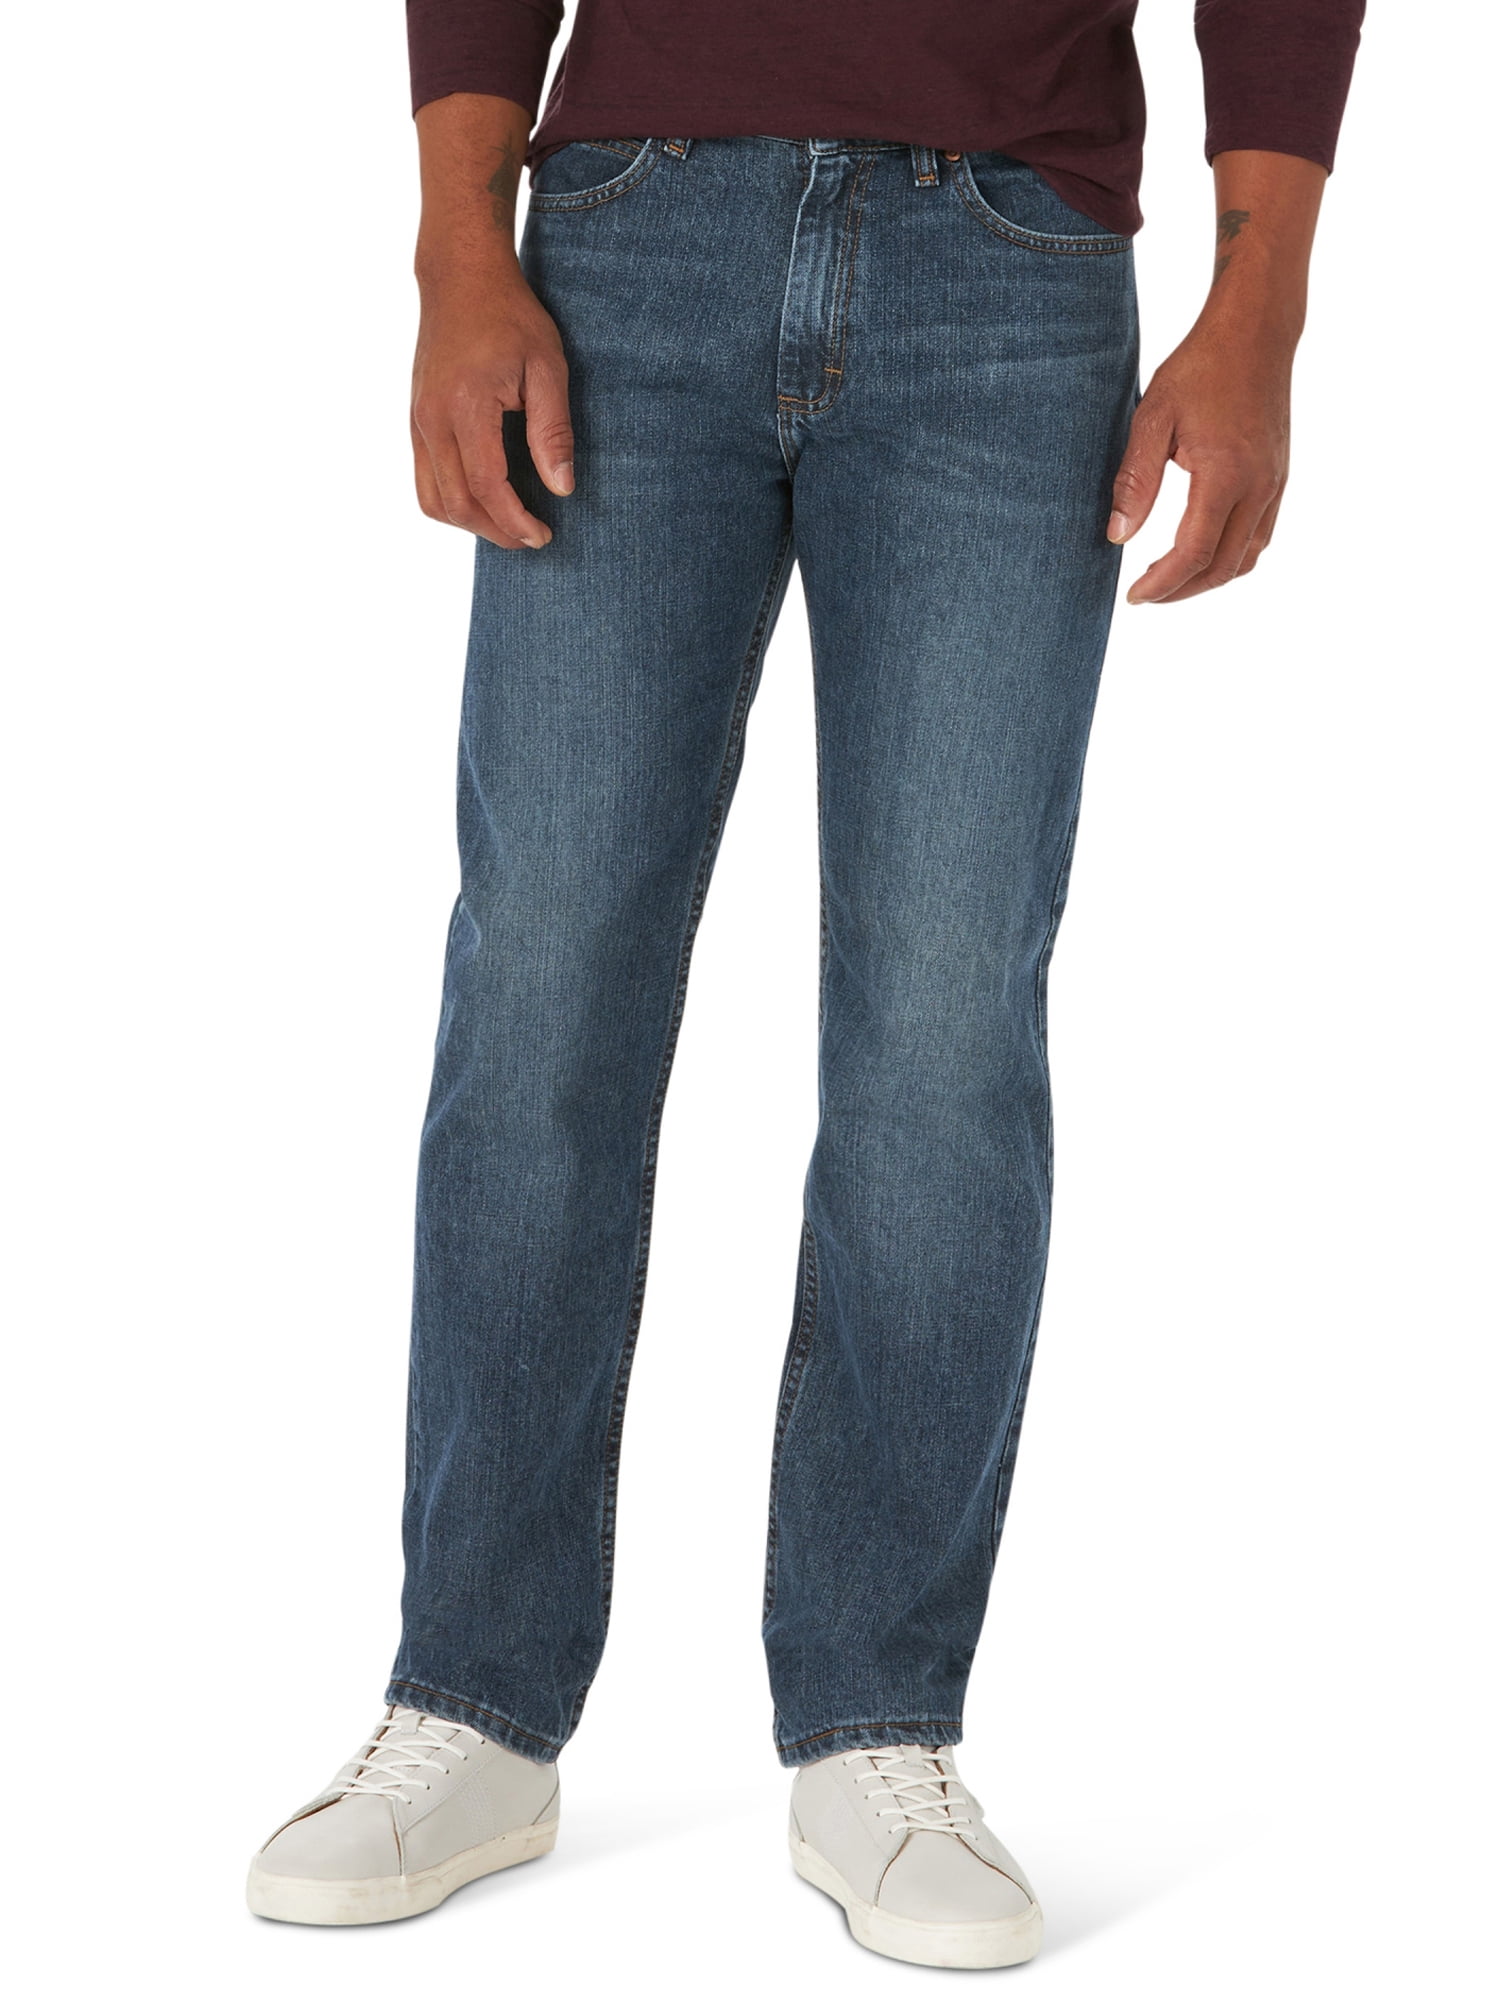 Lee Men's Legendary Denim Regular Straight Five Pocket Jeans